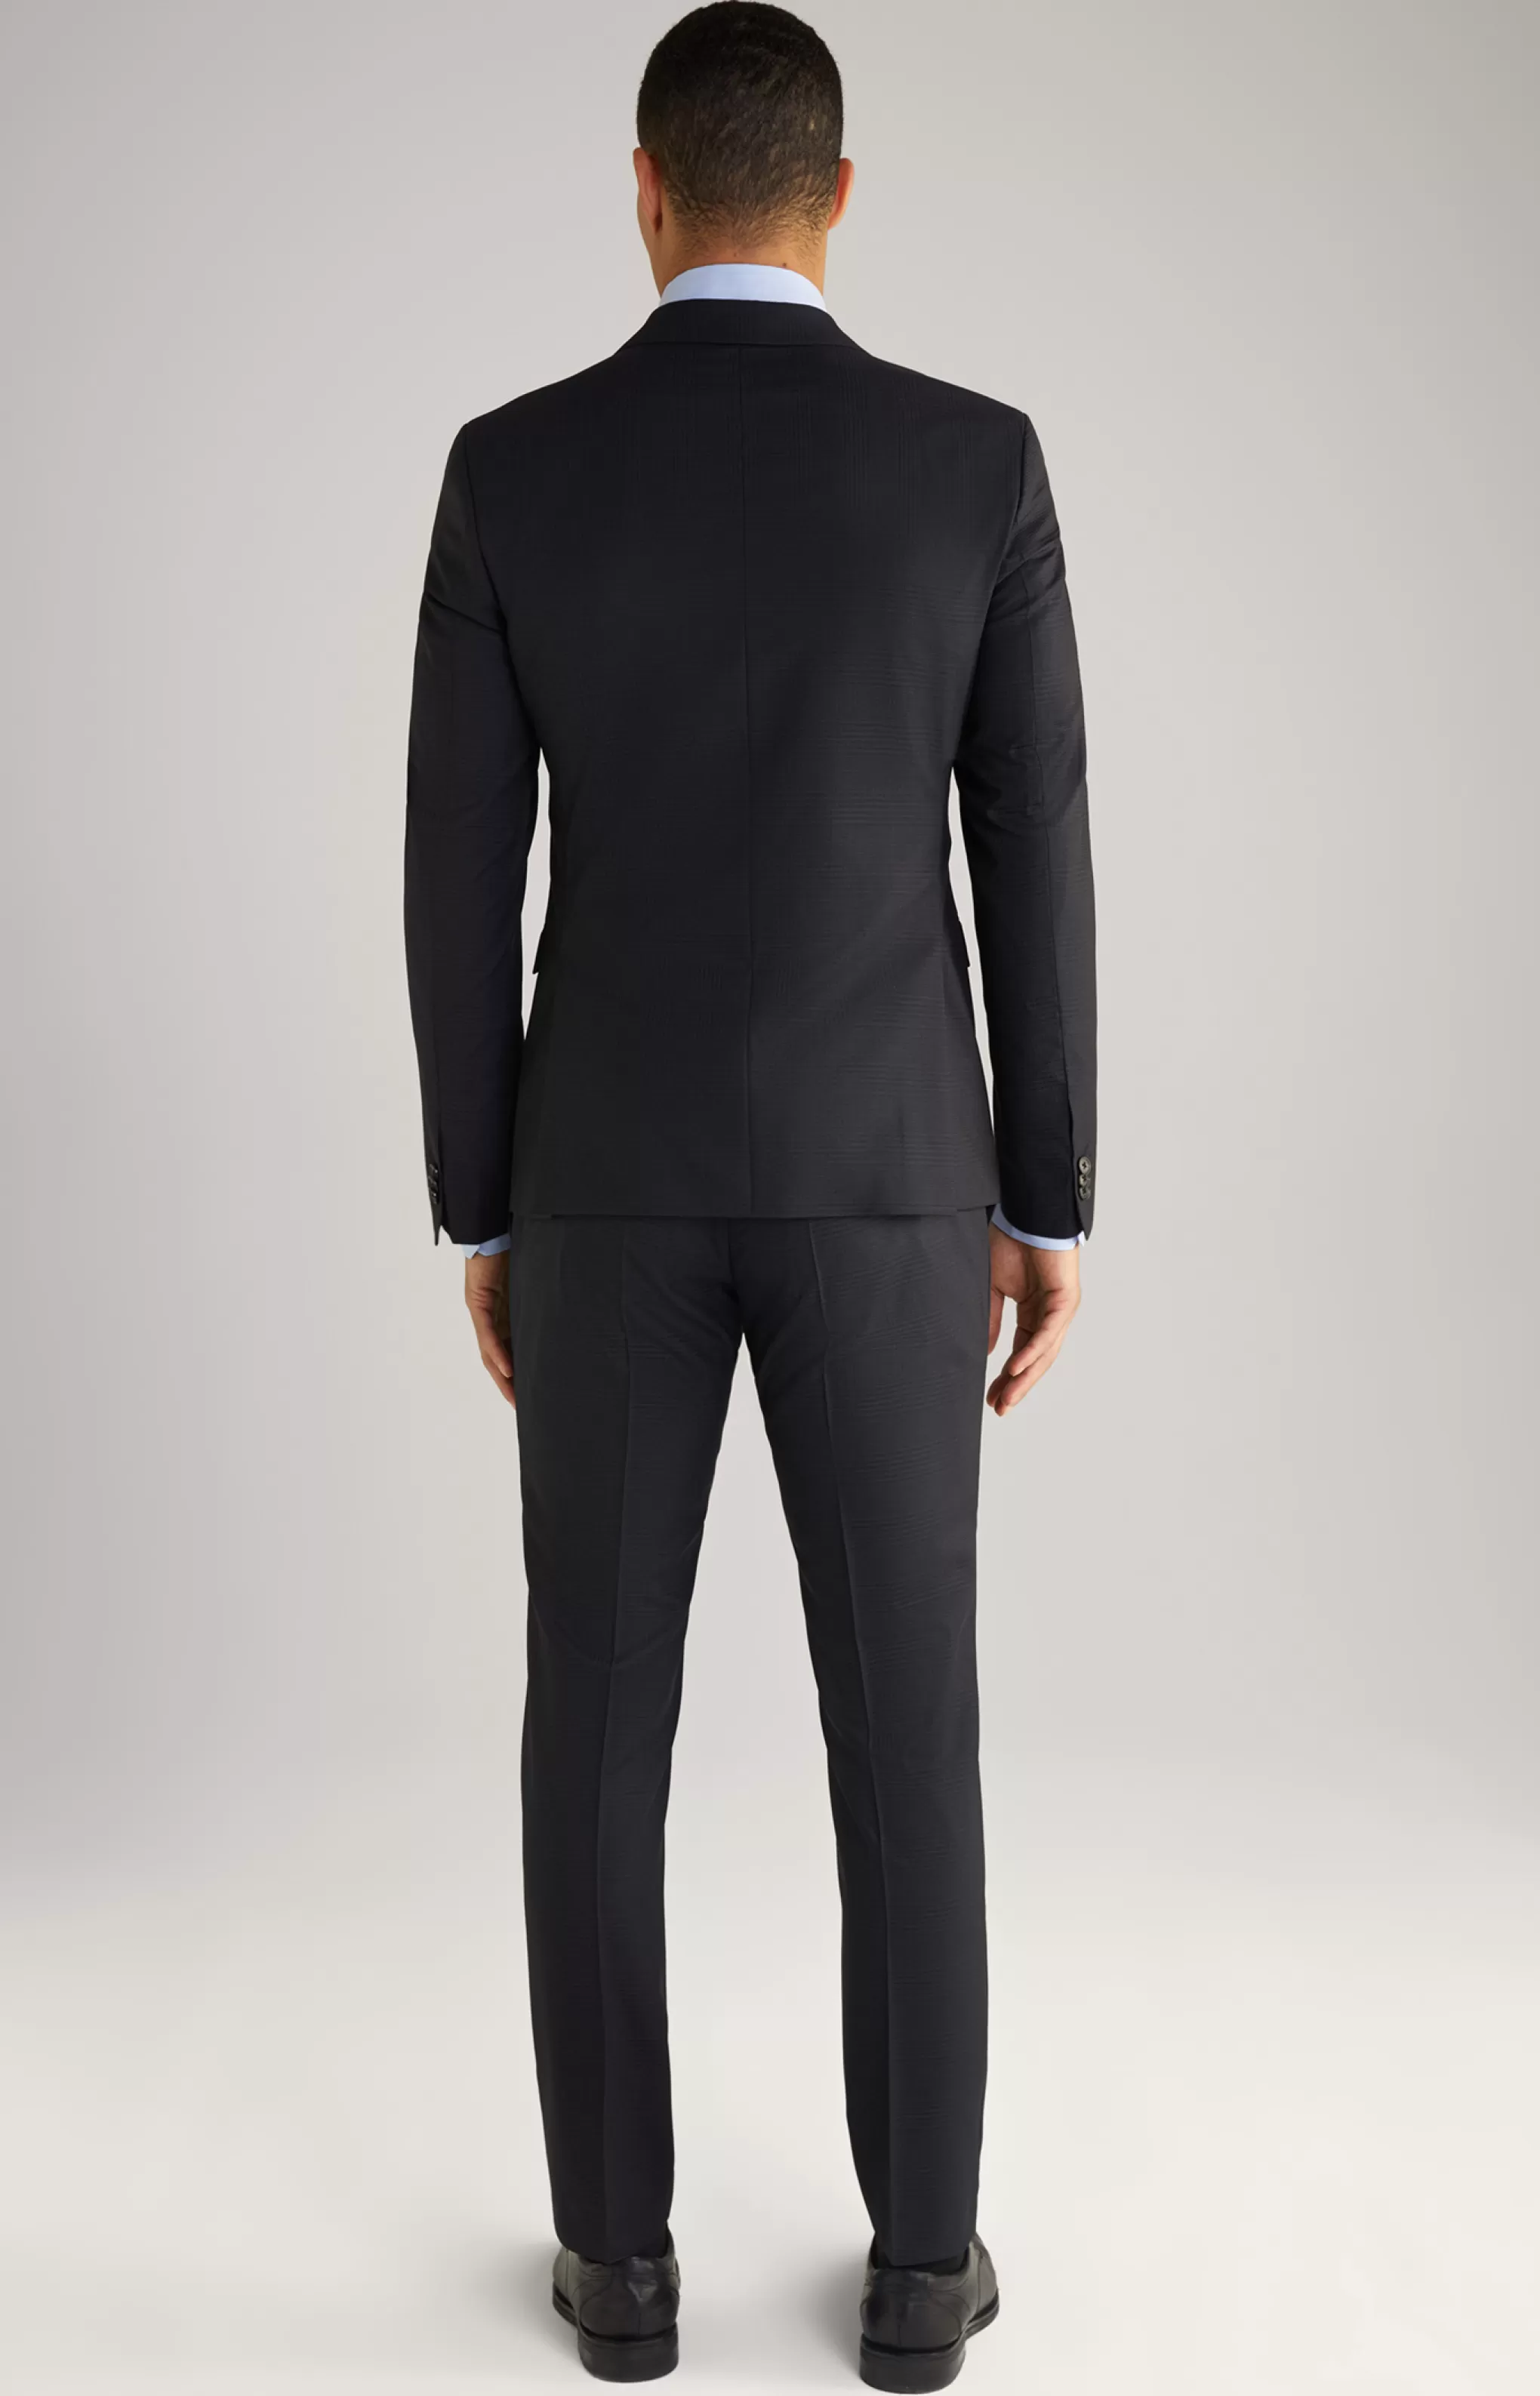 Suits | Clothing*JOOP Suits | Clothing Damon-Gun Virgin Wool Suit in Check